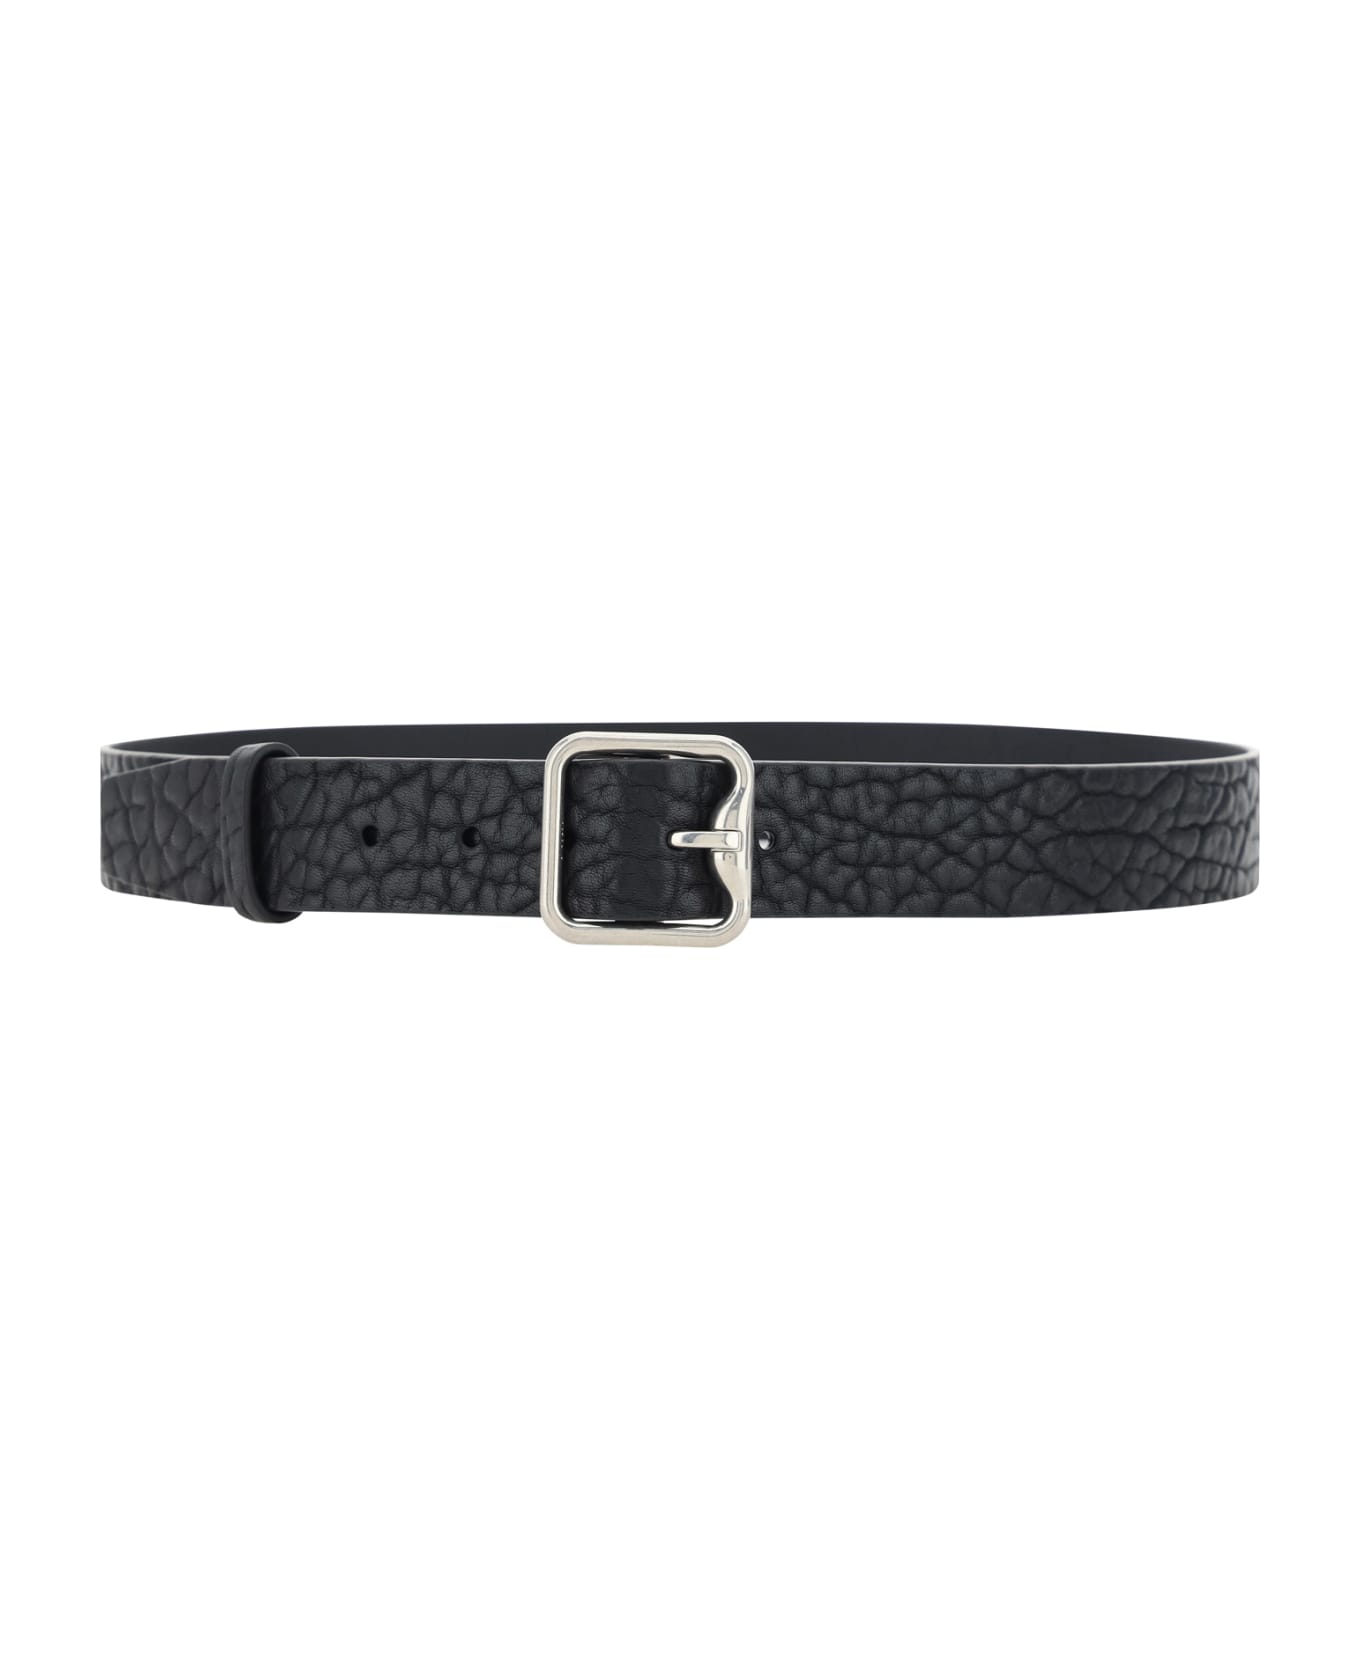 Burberry Belt - Black/silver